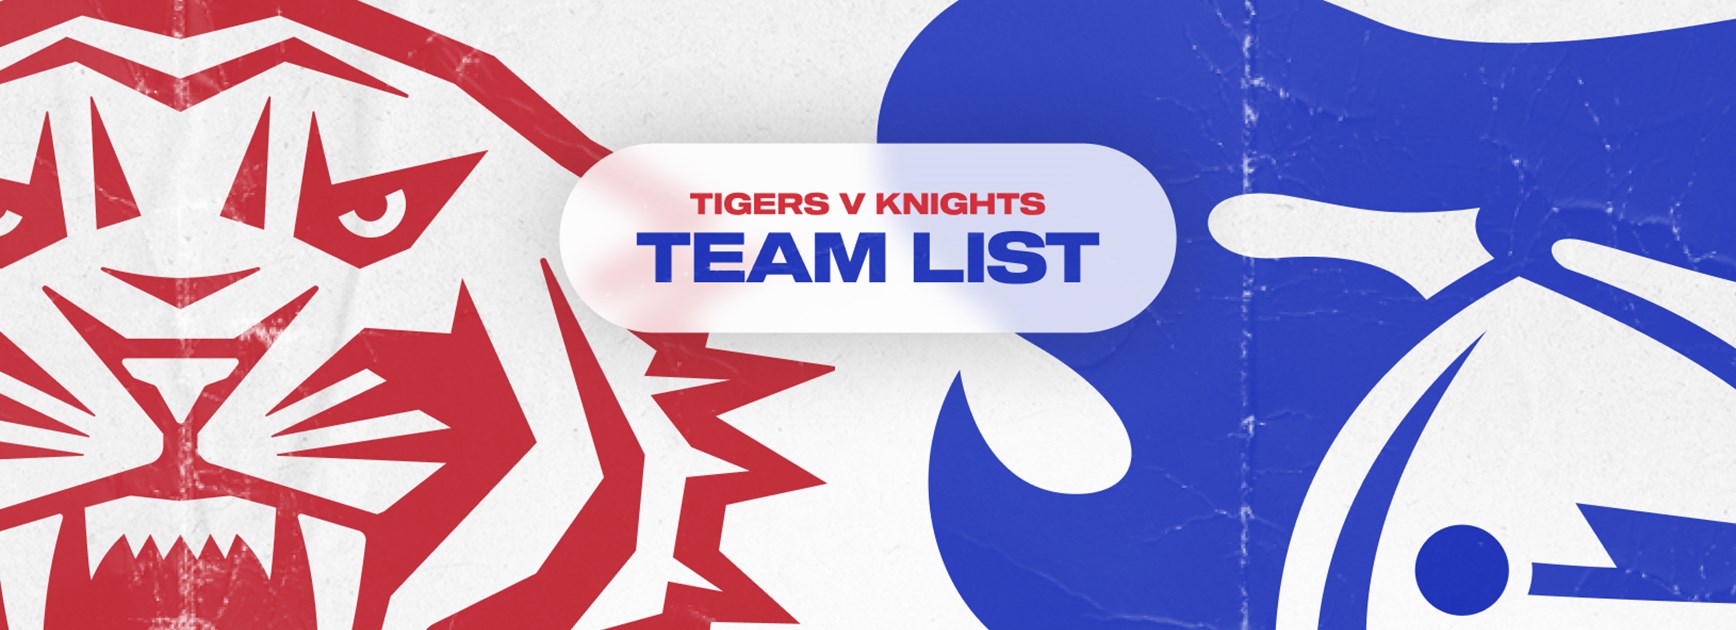 Tigers v Knights Round 10 NRL team list